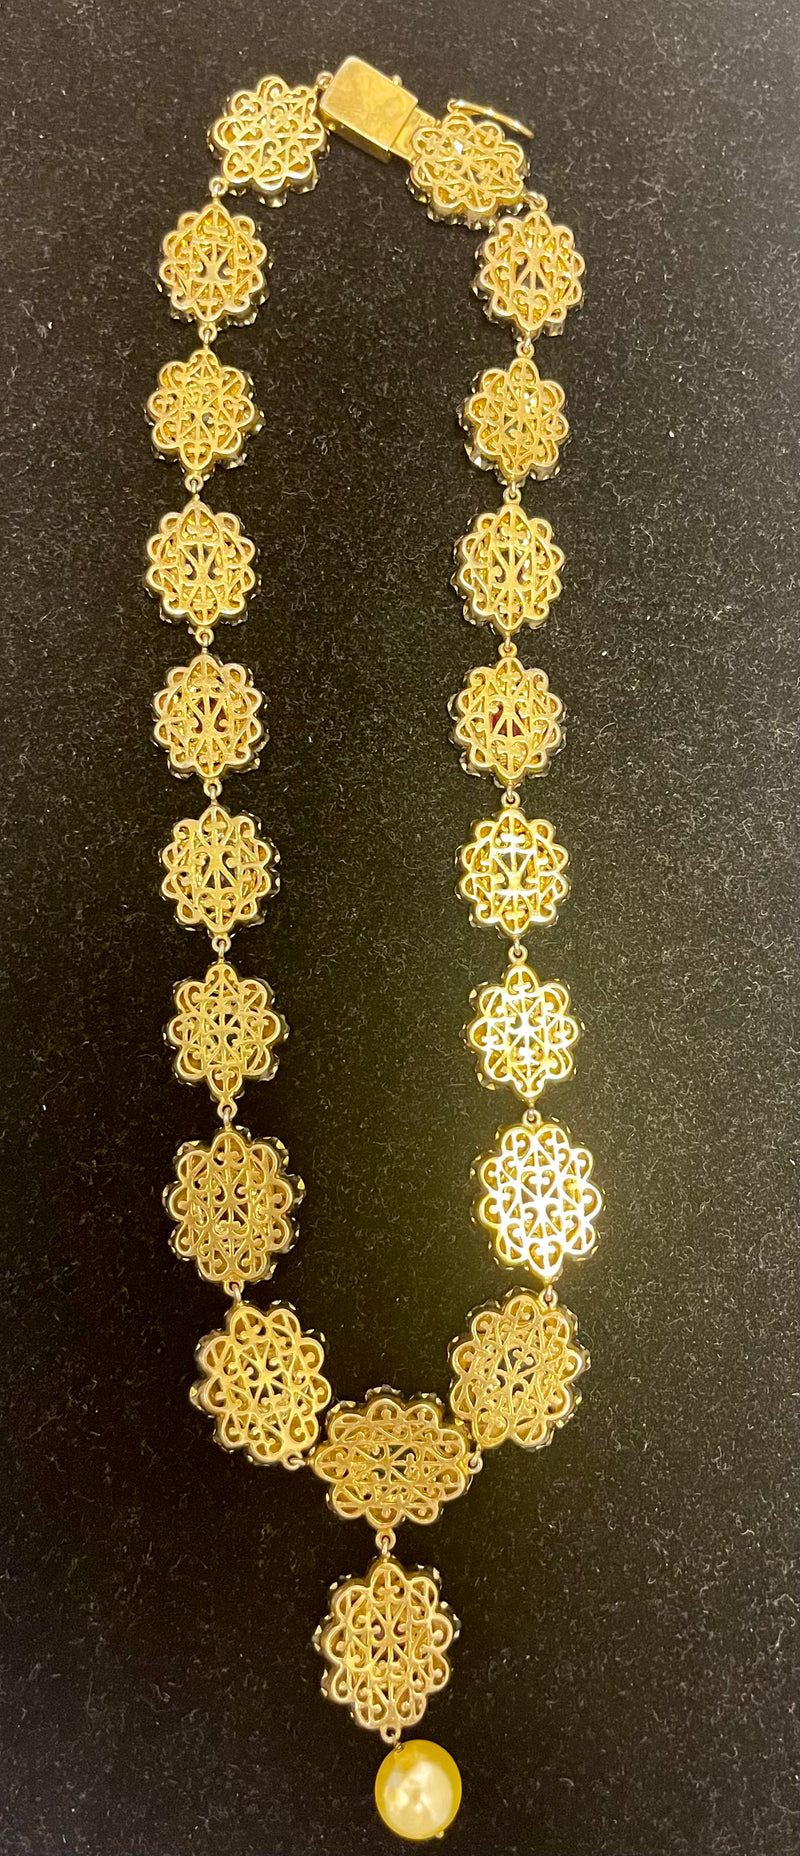 Antique Gemstone Necklace w/ Pearls, Diamonds, Rubies & More - $200K APR w/ CoA! APR57